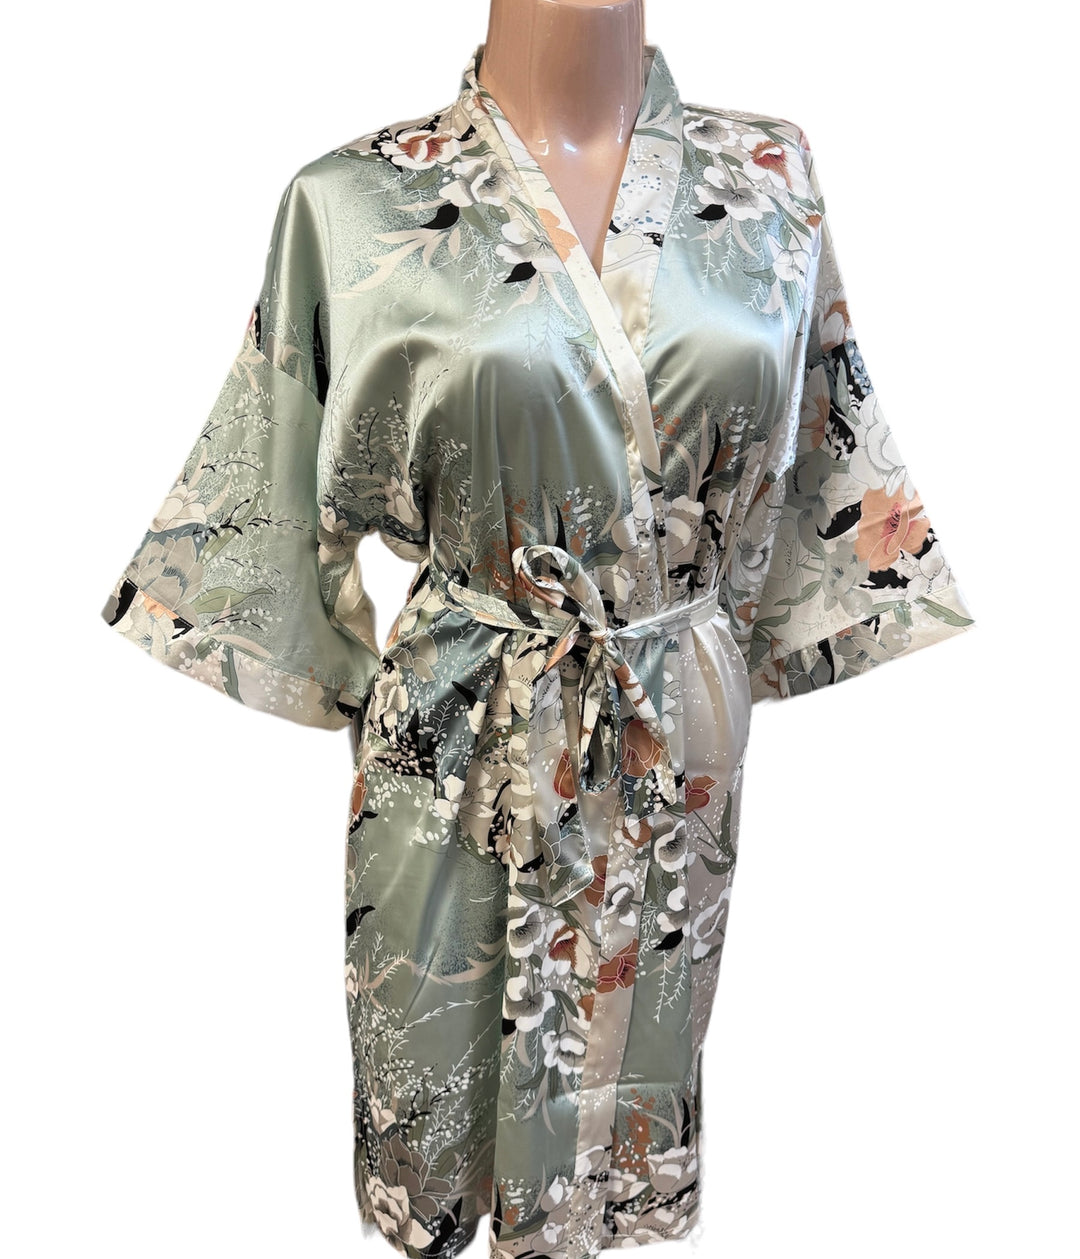 Blossom Kimono